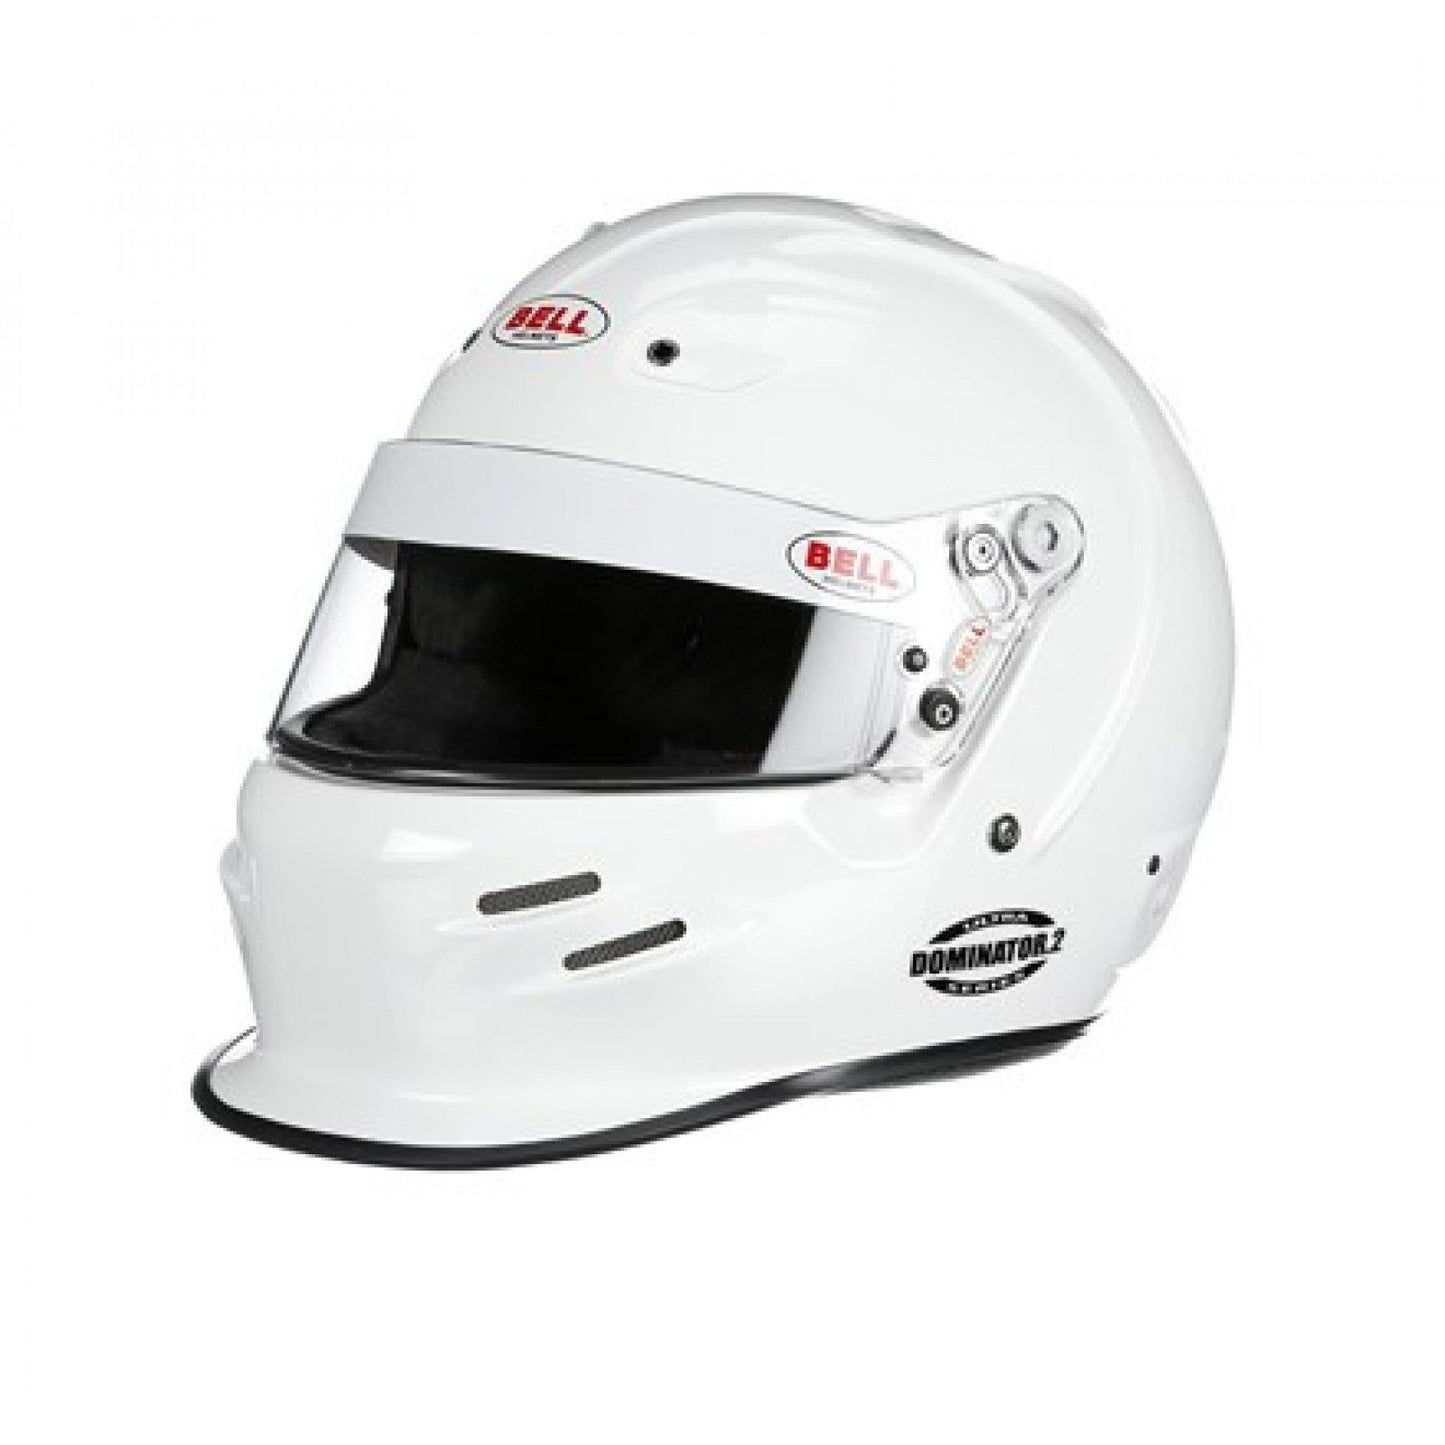 Bell Dominator2 Racing Helmet White 61cm plus-BEL-1312006-Helmets-Bell-JDMuscle